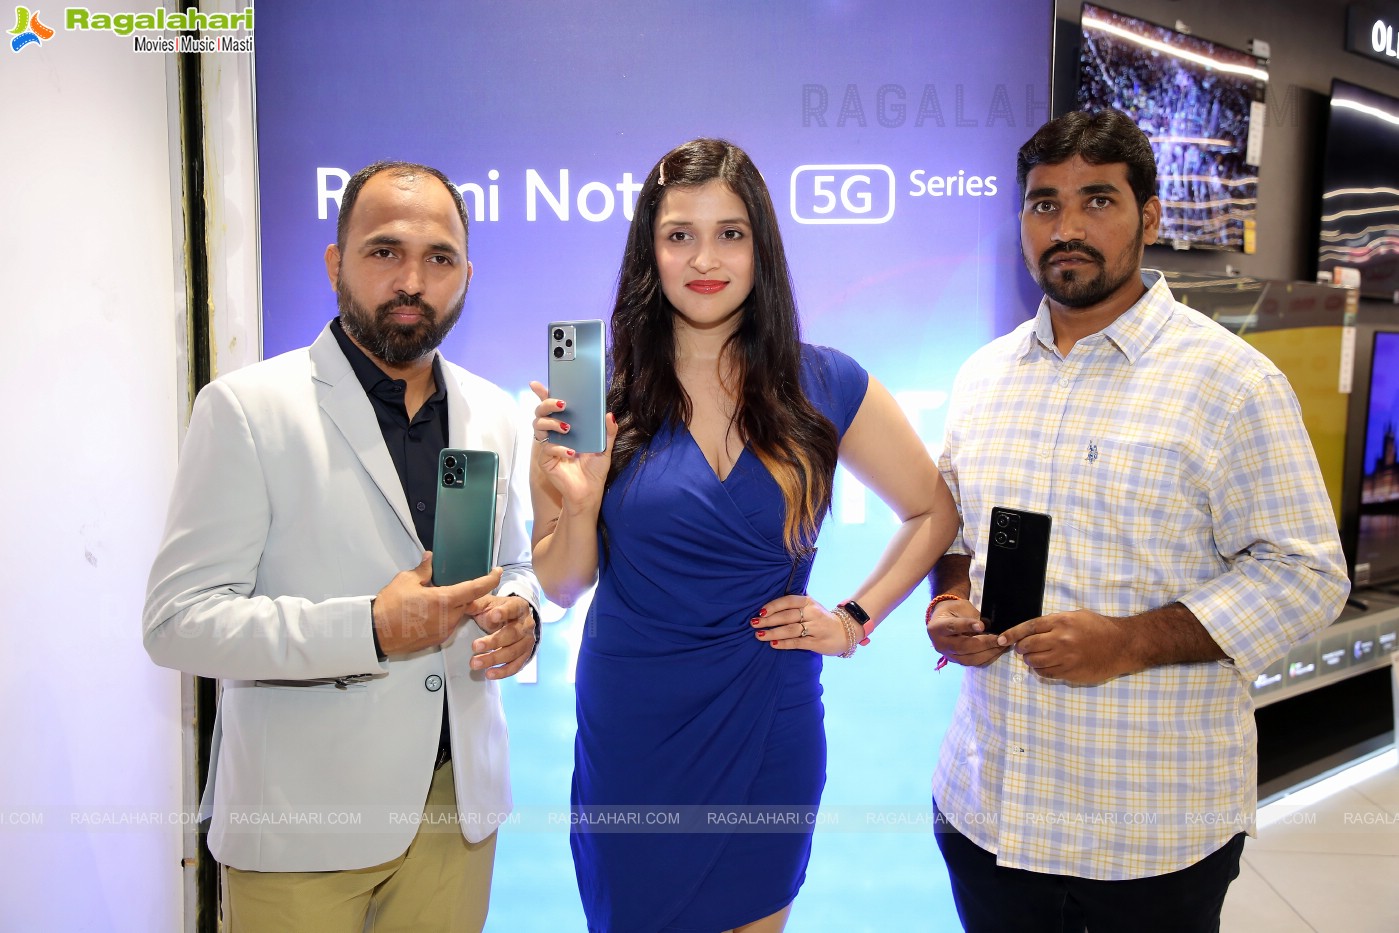 Redmi Note 12 5G Series Launch at Bajaj Electronics, Inorbit Mall